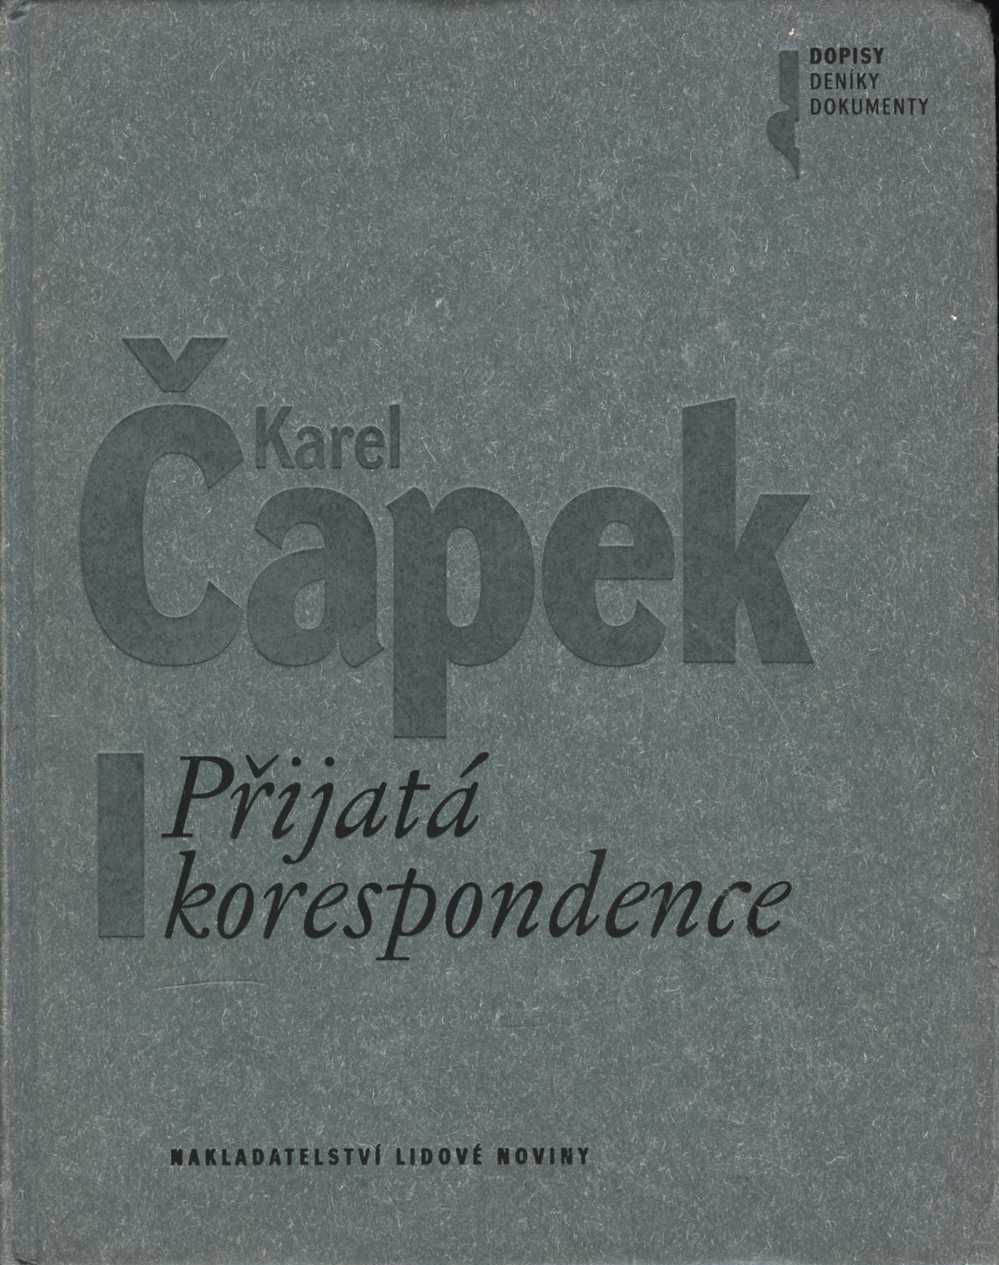 Přijatá korespondence (Karel Čapek)